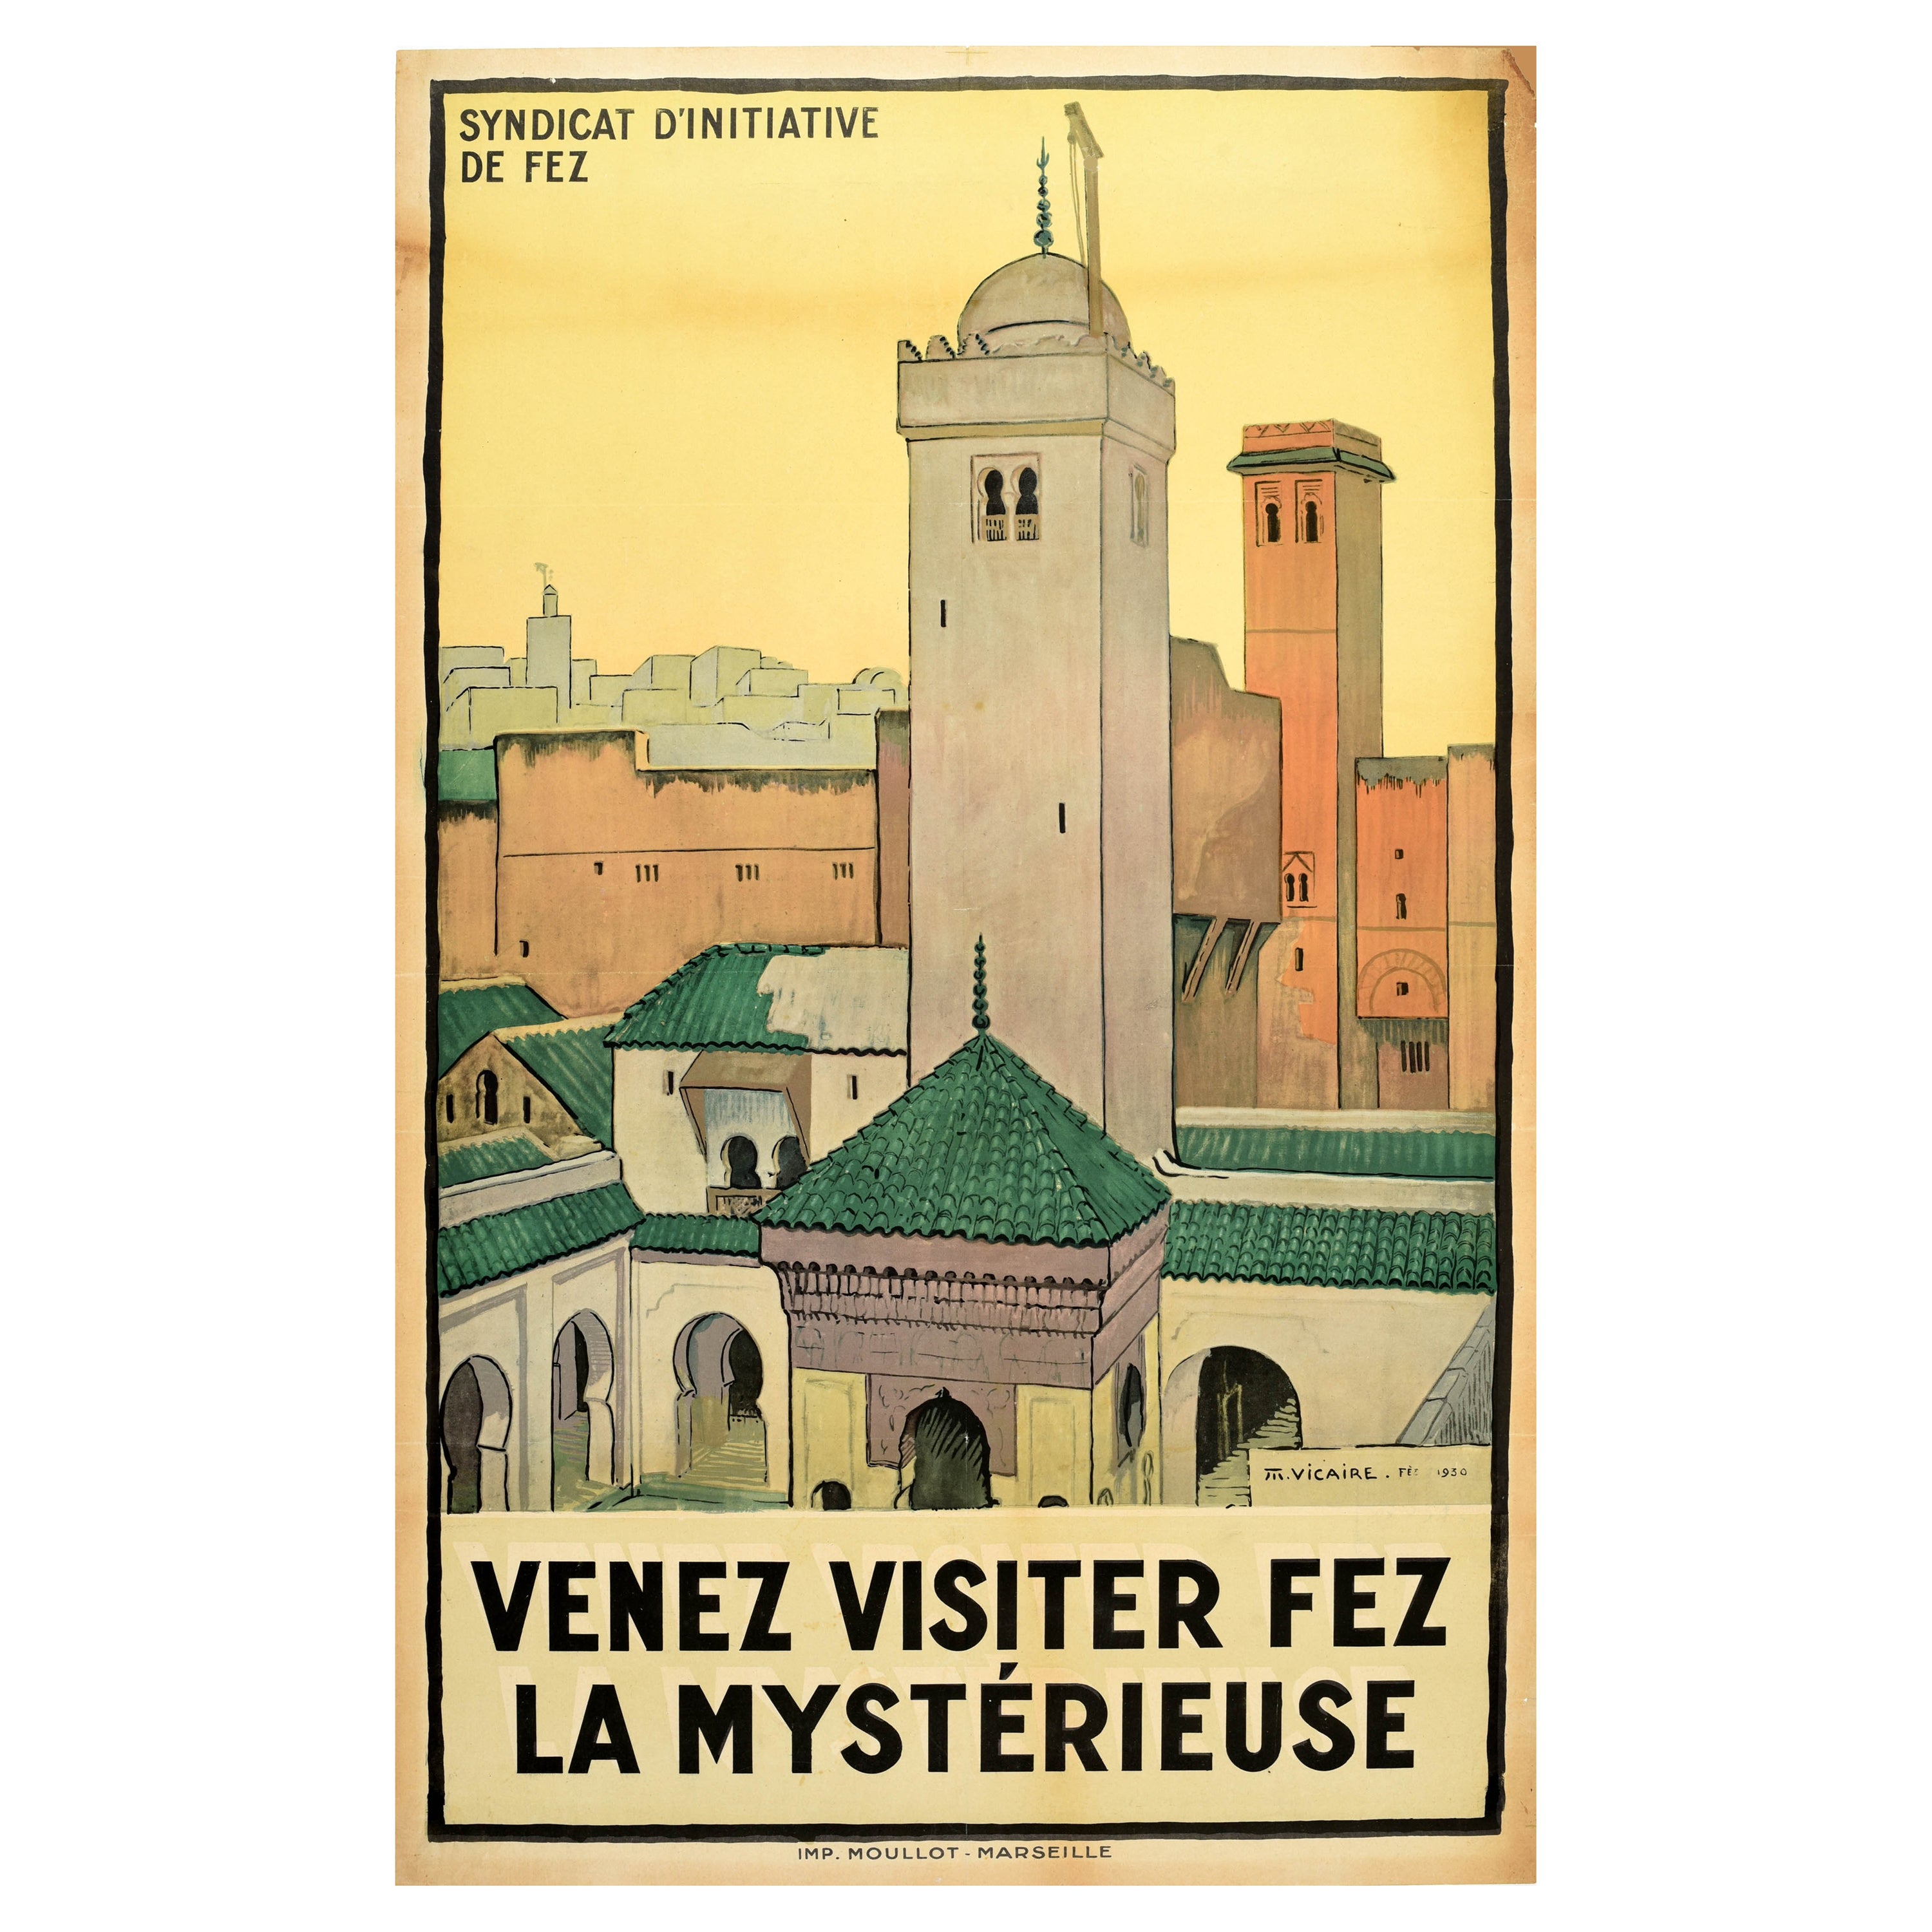 Original-Vintage-Reiseplakat Fez Marokko Nordafrika, Mysterium Vicaire, Mysterium im Angebot